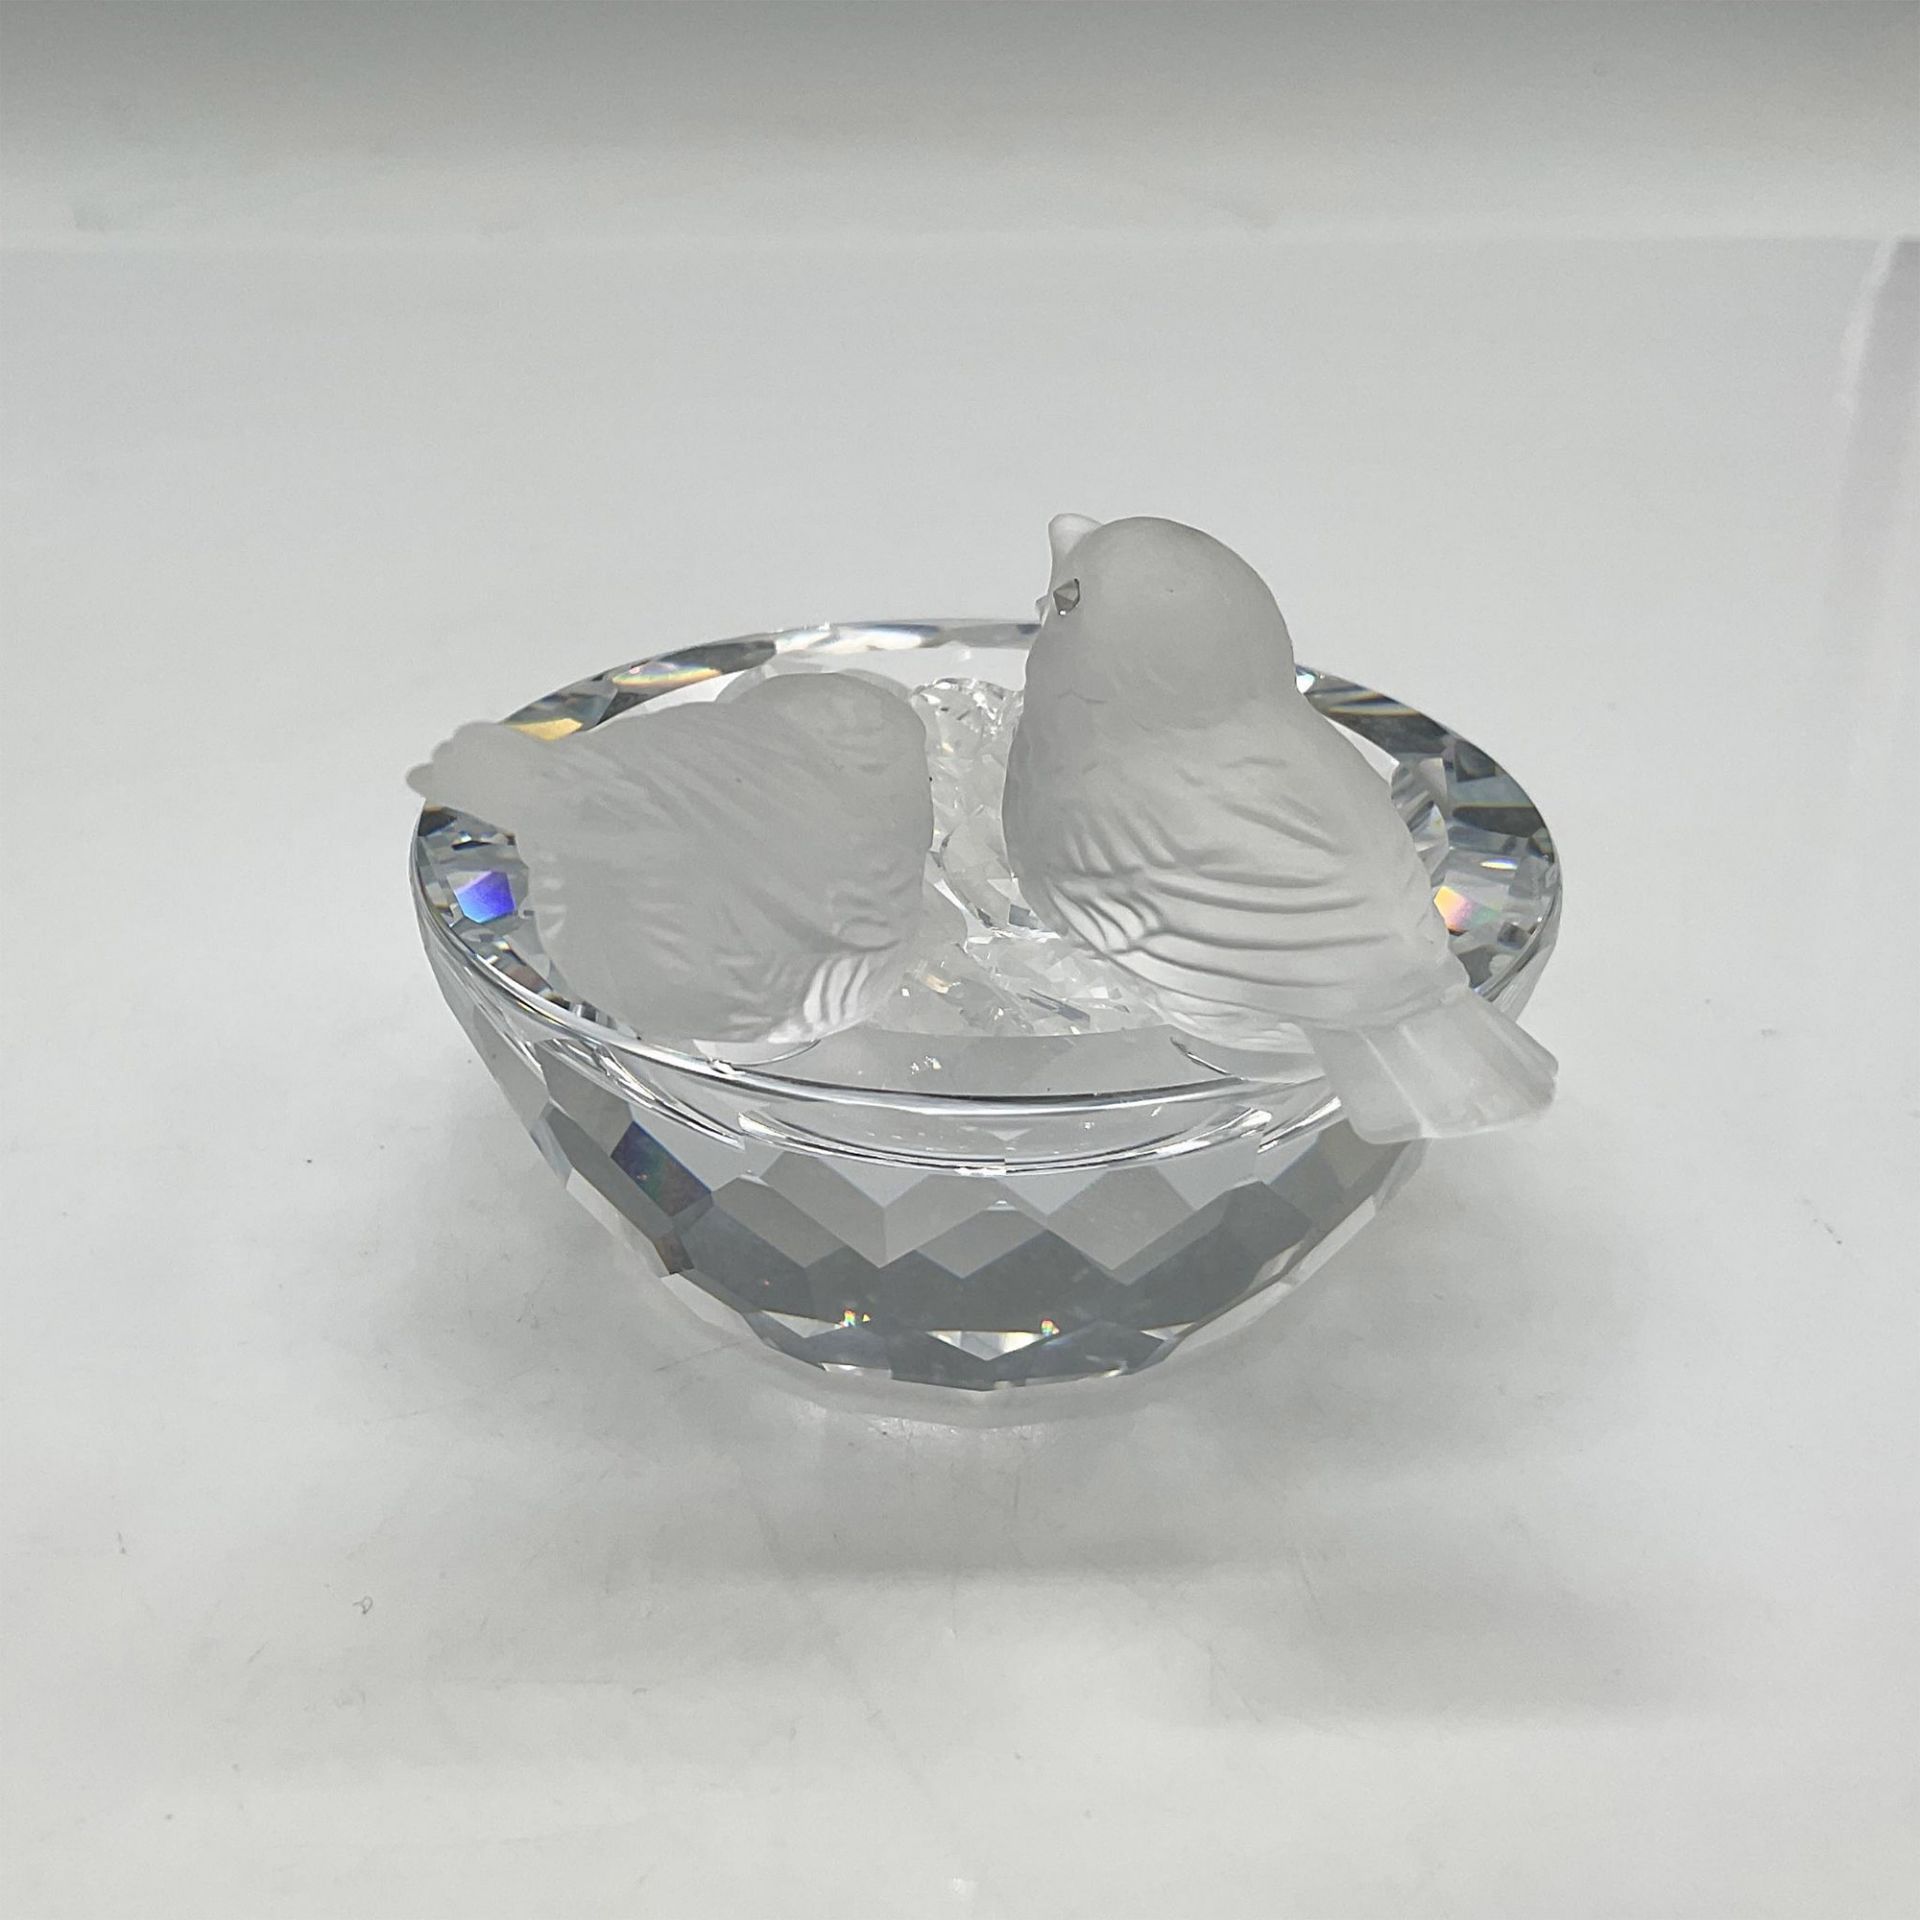 Swarovski Crystal Figurine, Bird Bath with Crystals - Image 2 of 4